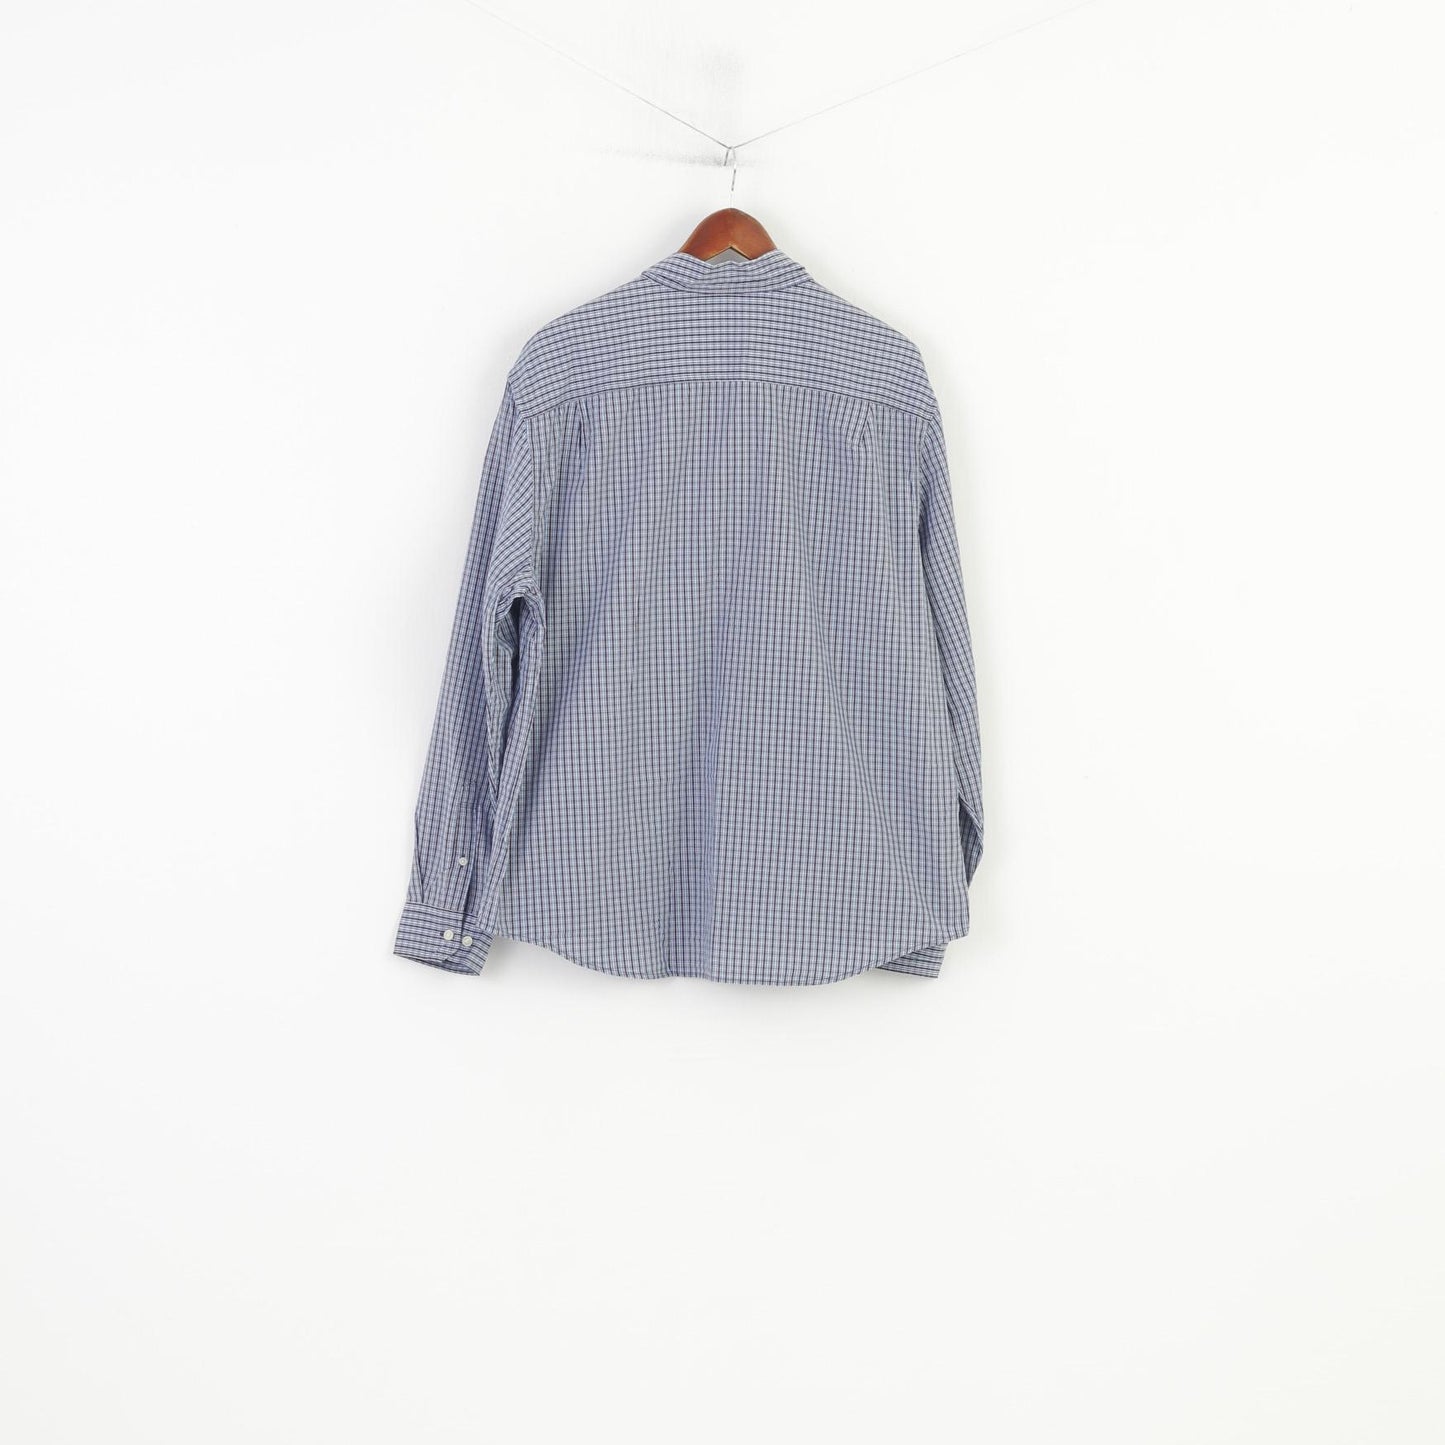 Marks & Spencer Men XL Casual Shirt Blue Checkered Pure Cotton Regular Fit Top